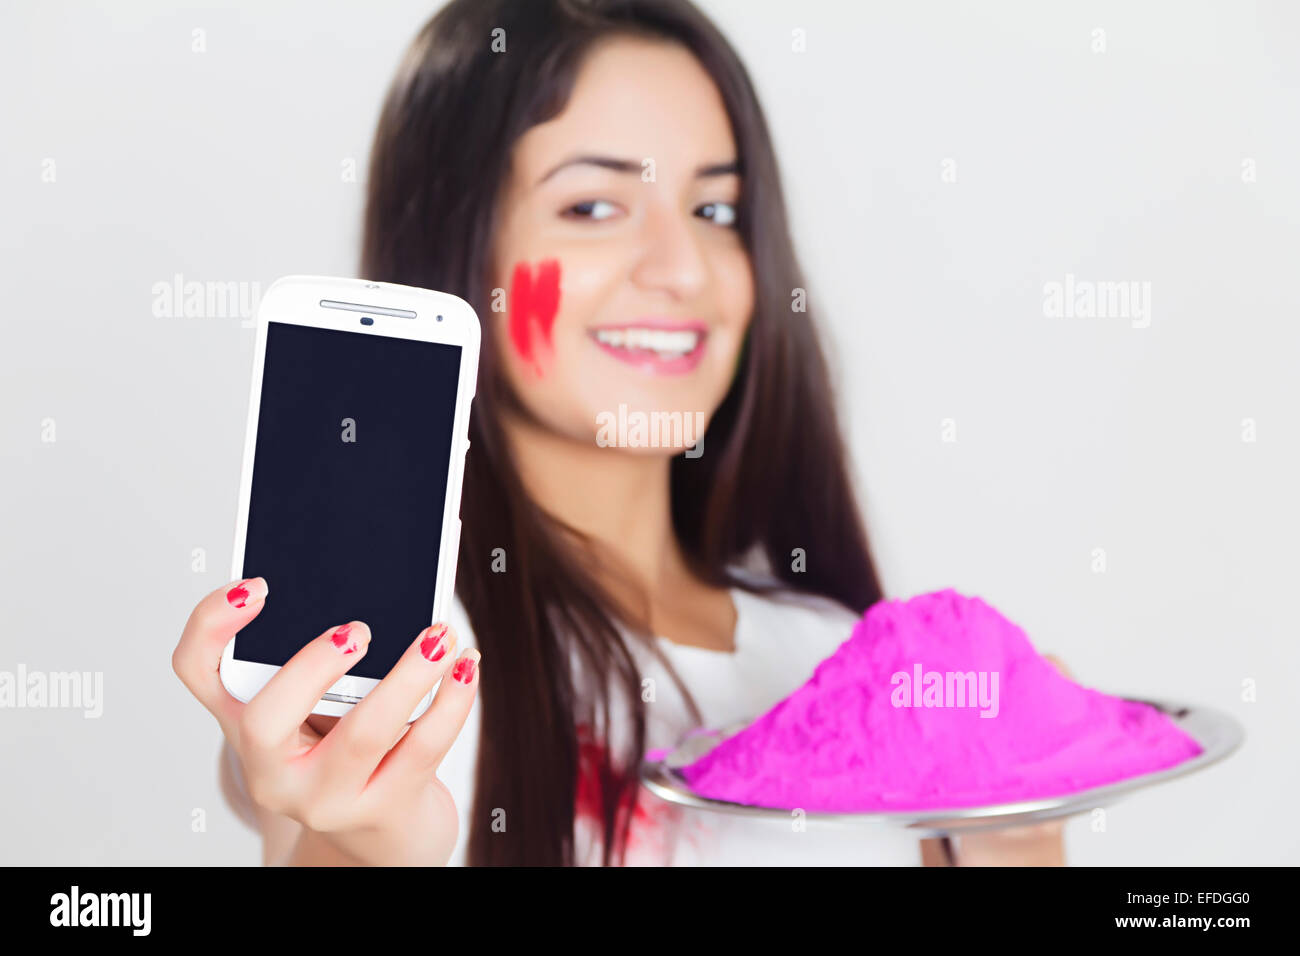 1 indian lady Holi Festival phone Selfie Stock Photo